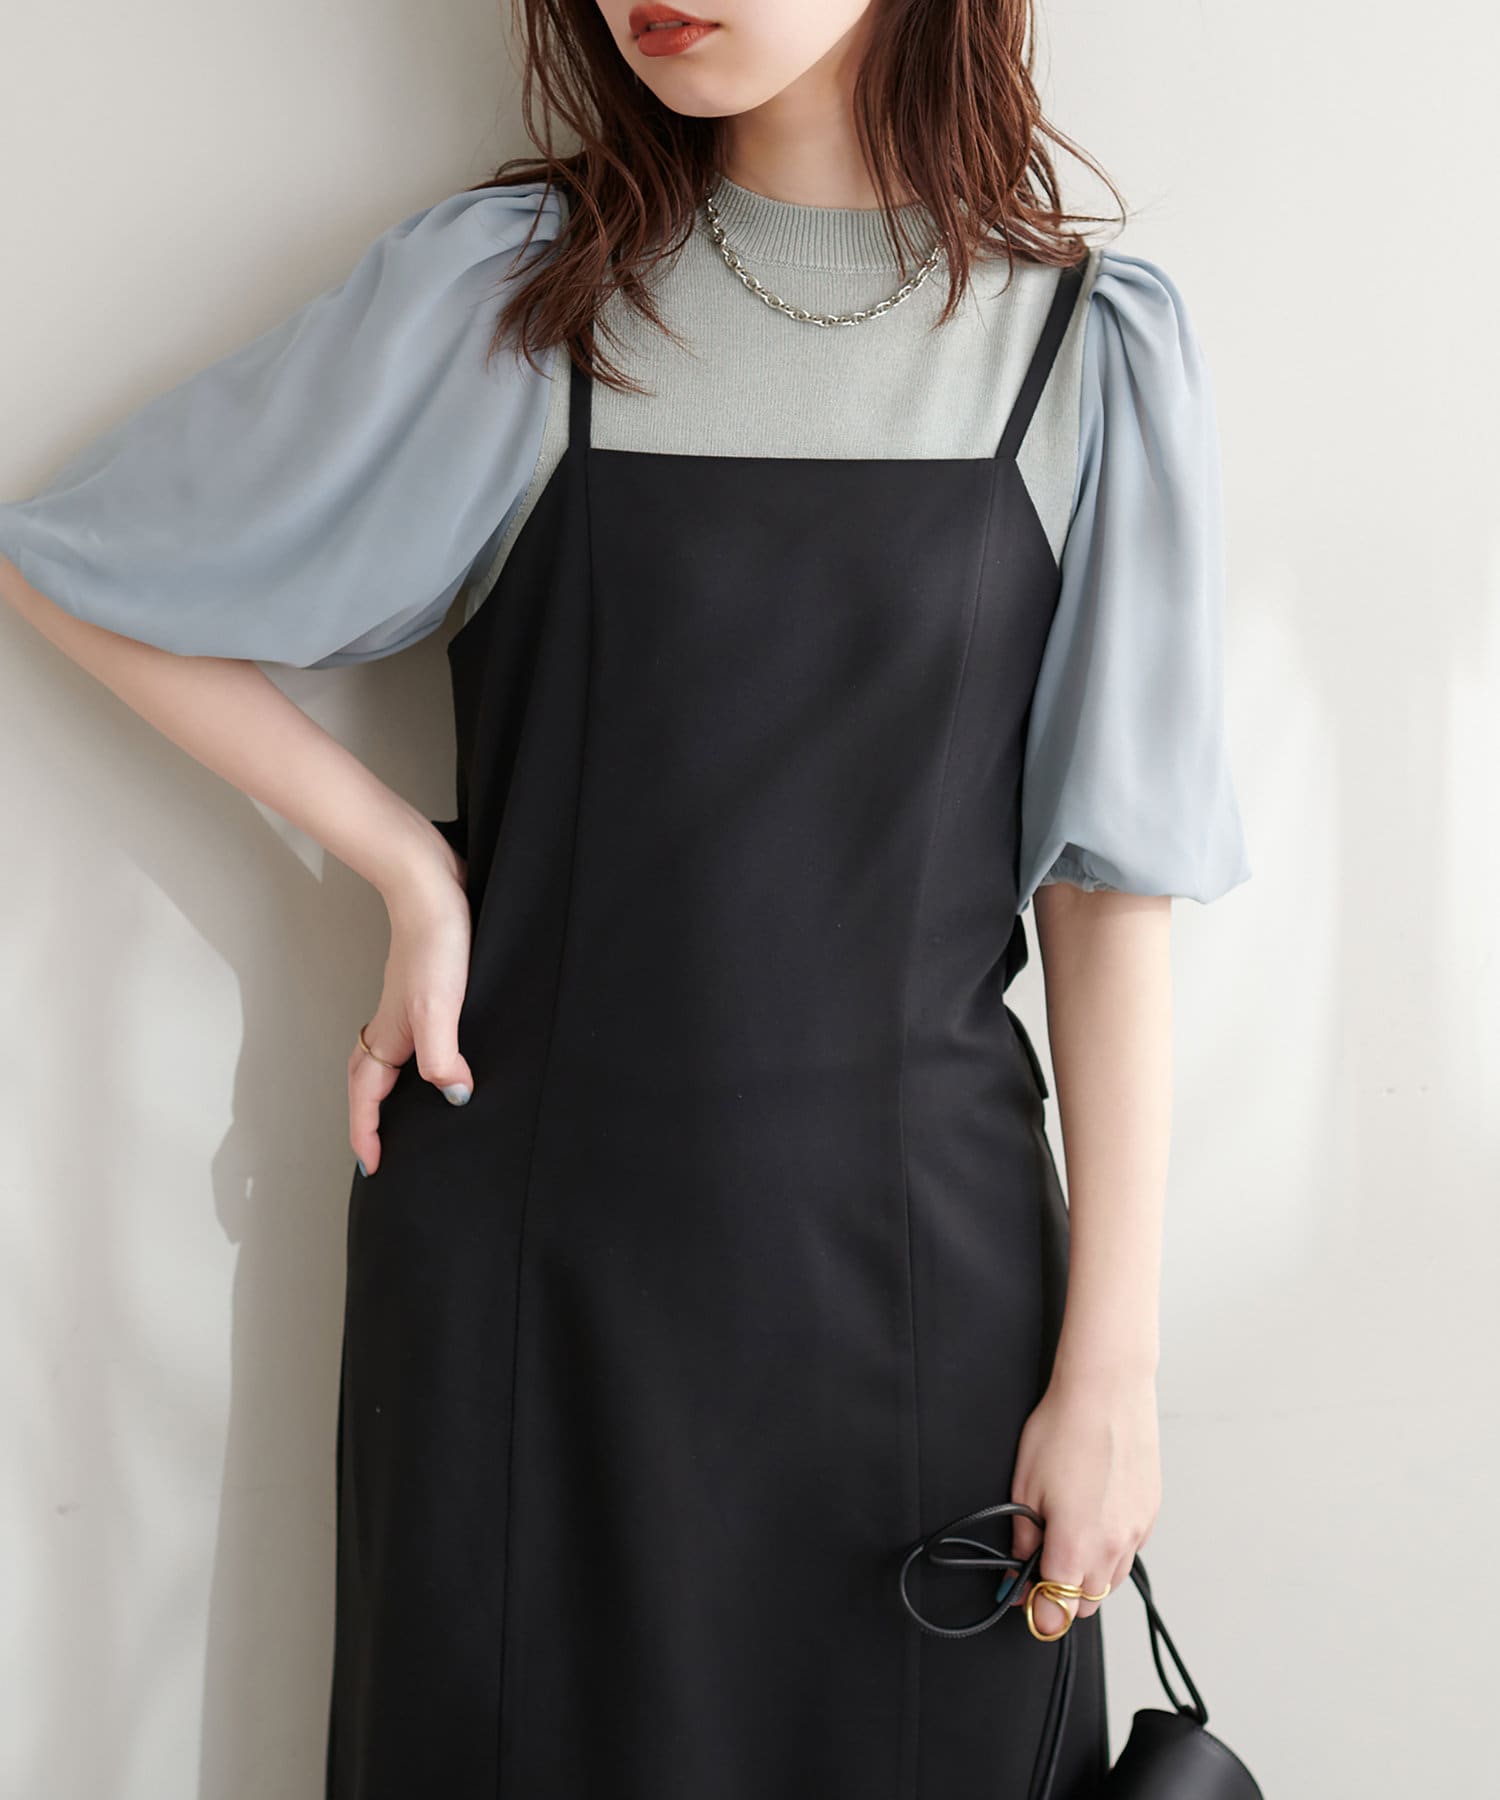 natural couture(ナチュラルクチュール) 異素材バルーン袖ニット